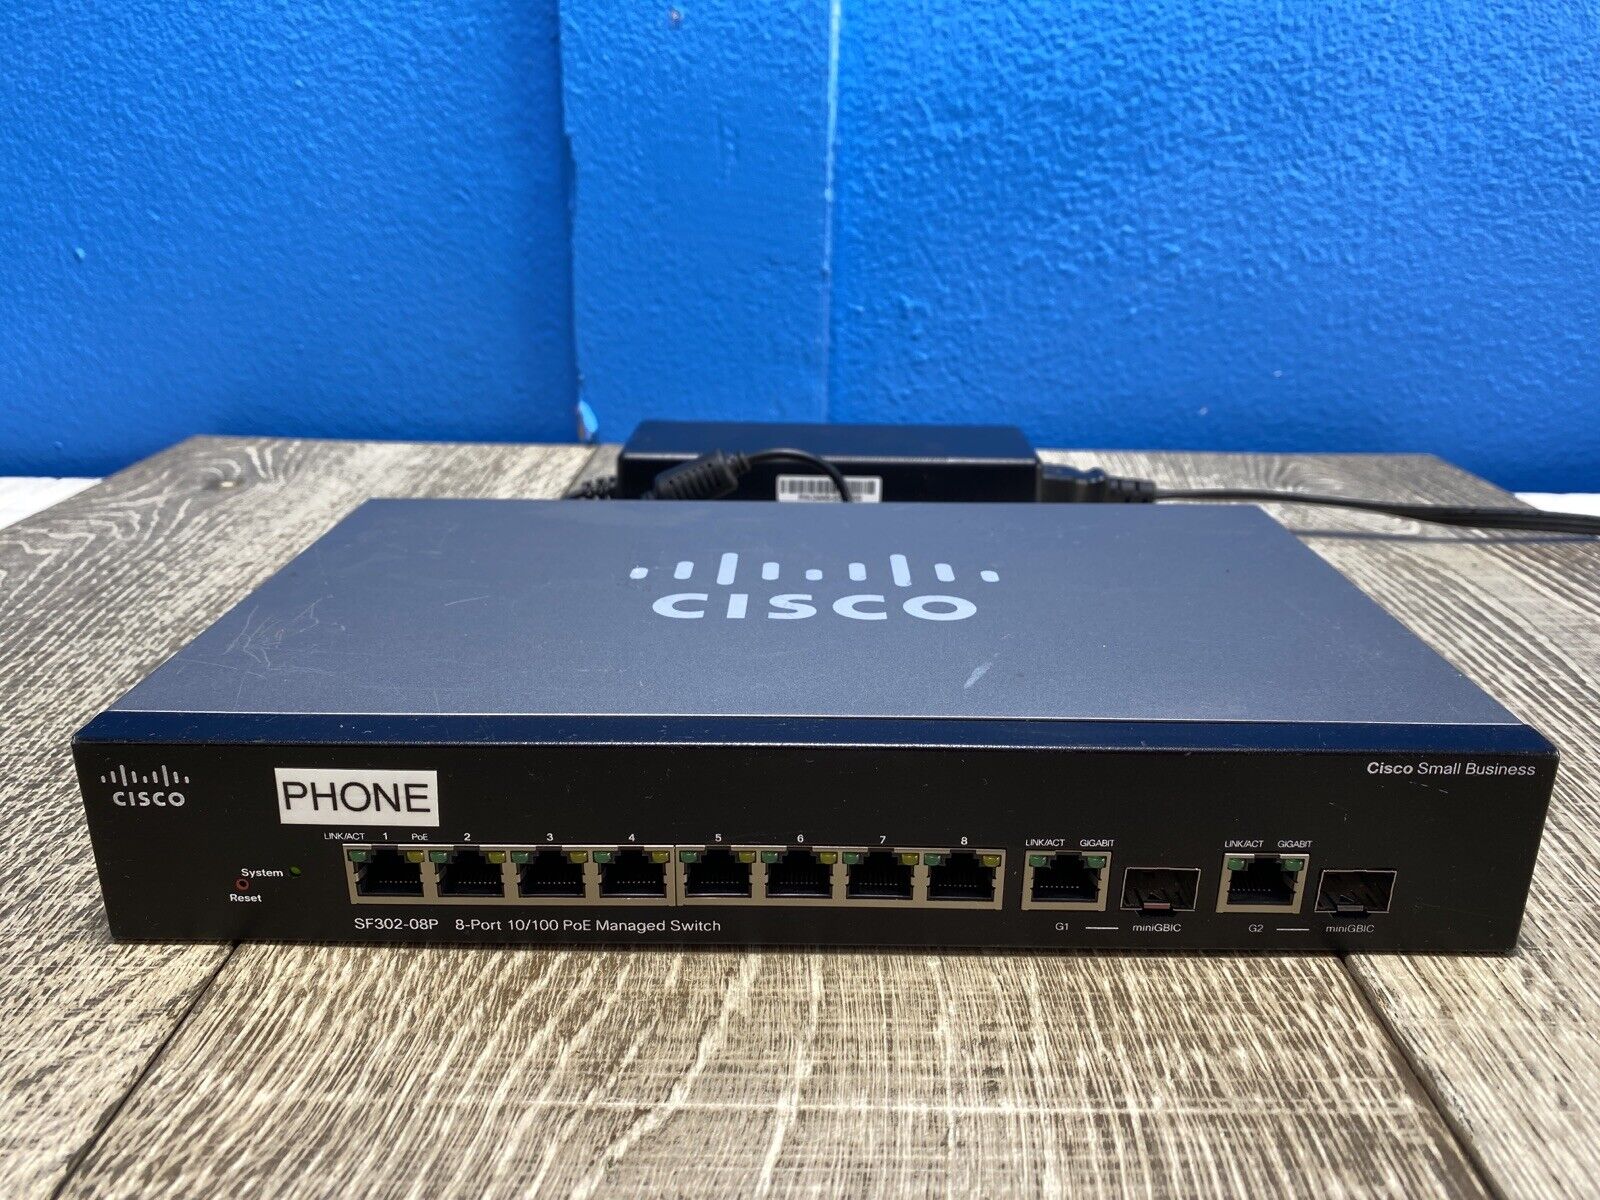 Cisco SF302-08P 8-Port 10/100 PoE Managed Switch Cisco Small Business SRW208P-K9